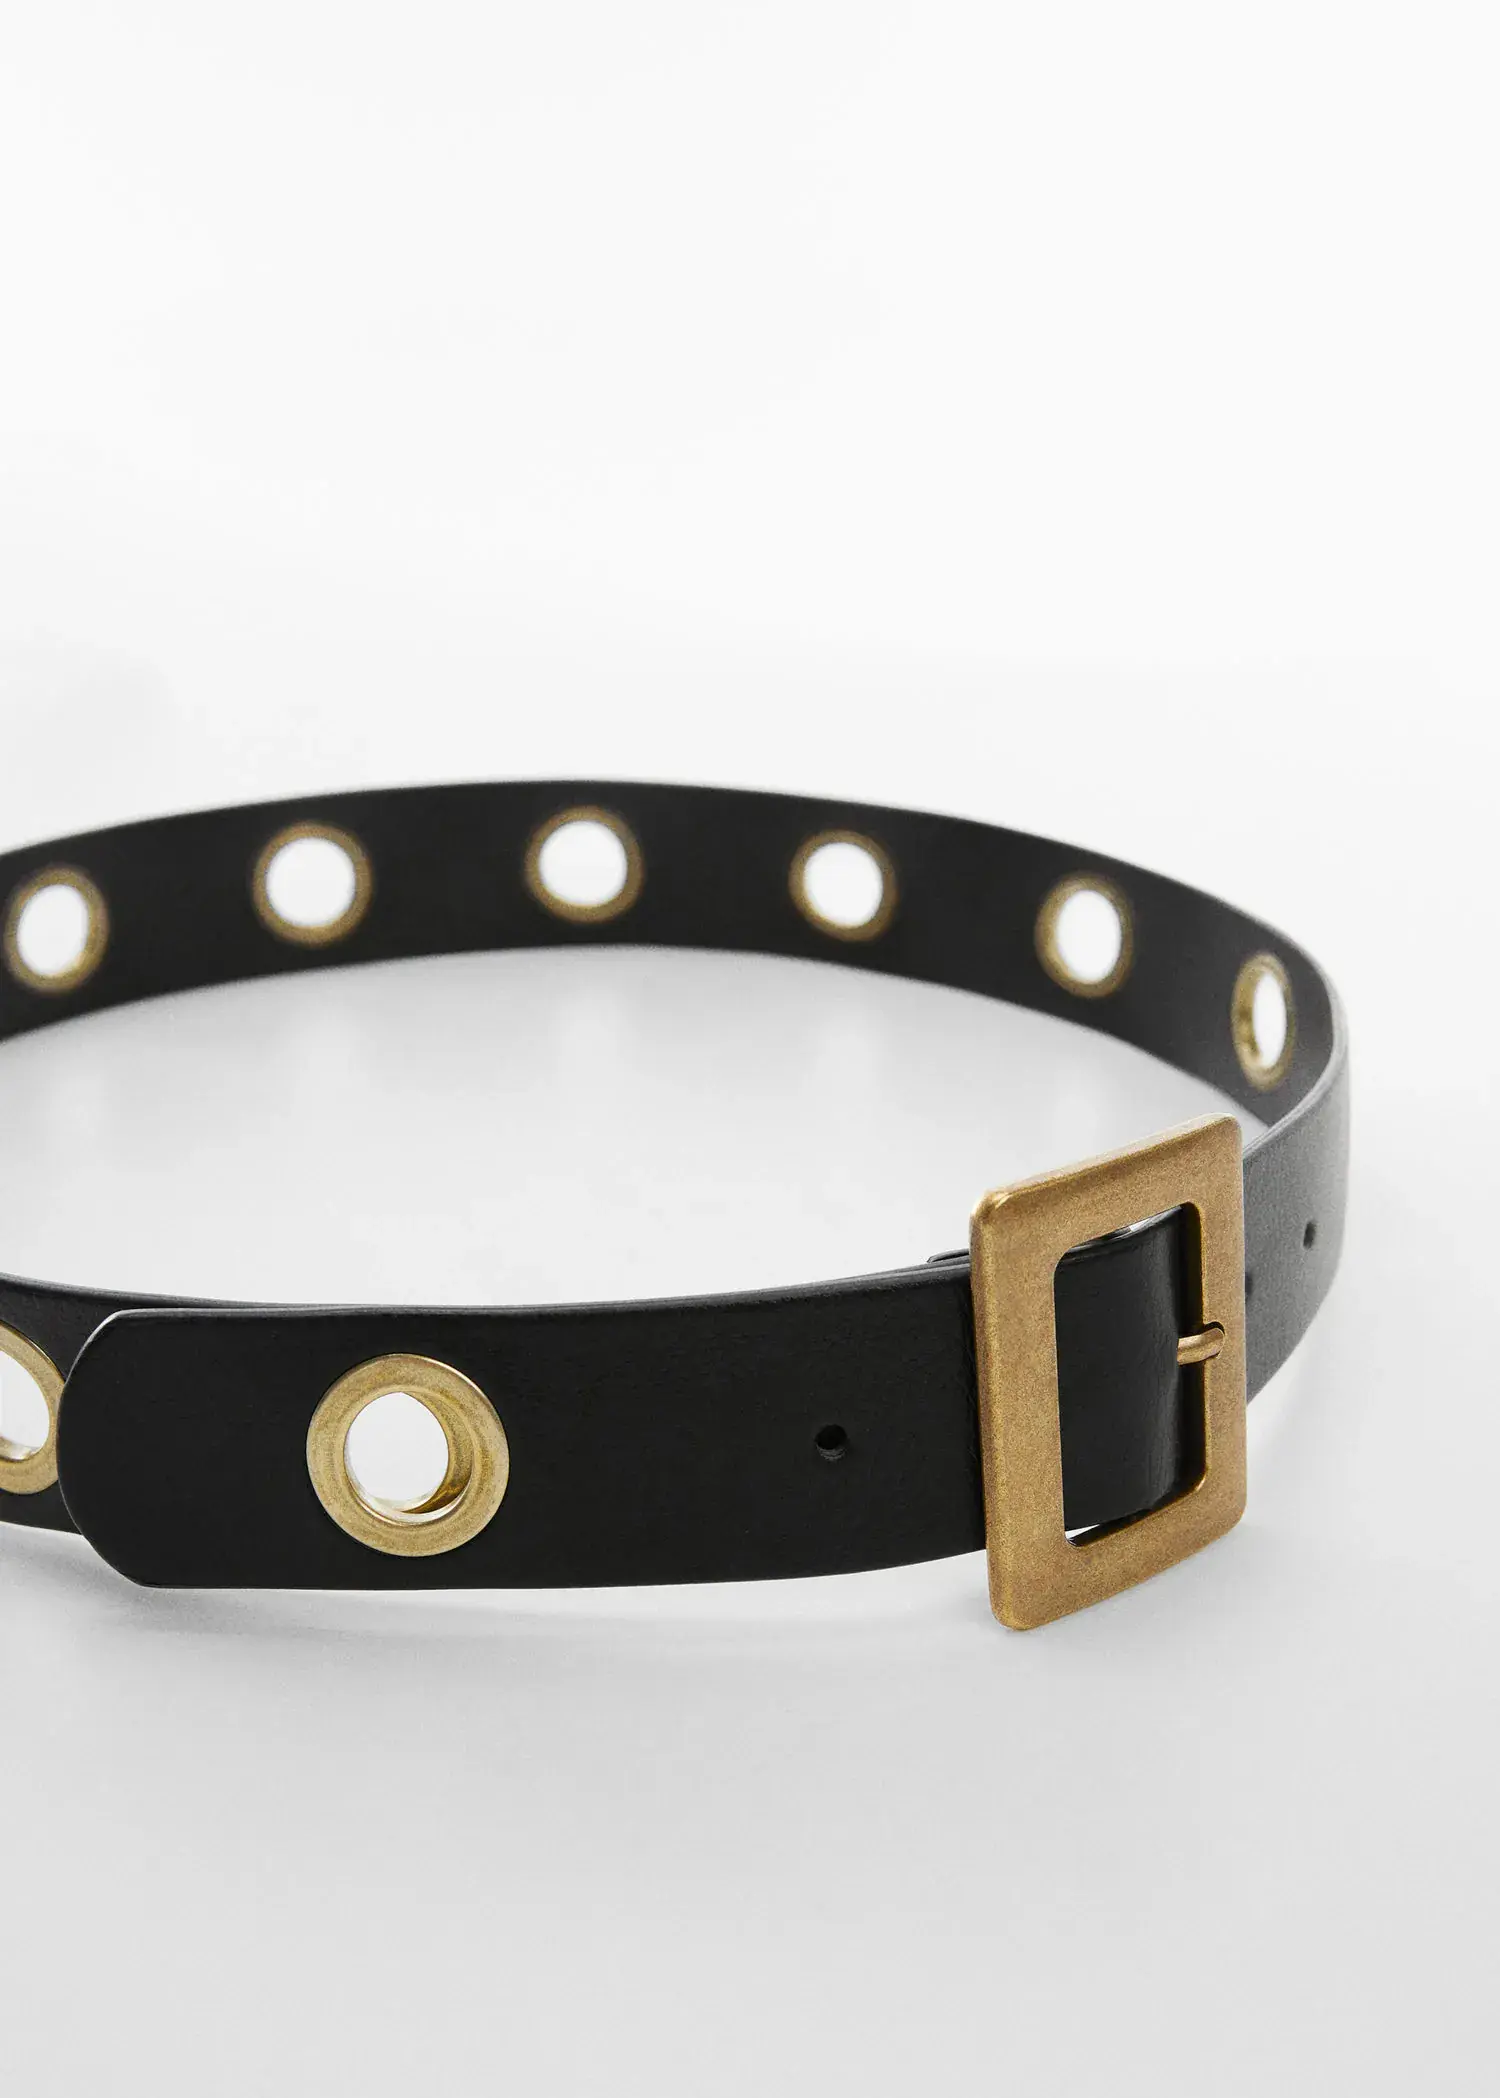 Mango Hoop belt. a black leather belt with a gold buckle. 